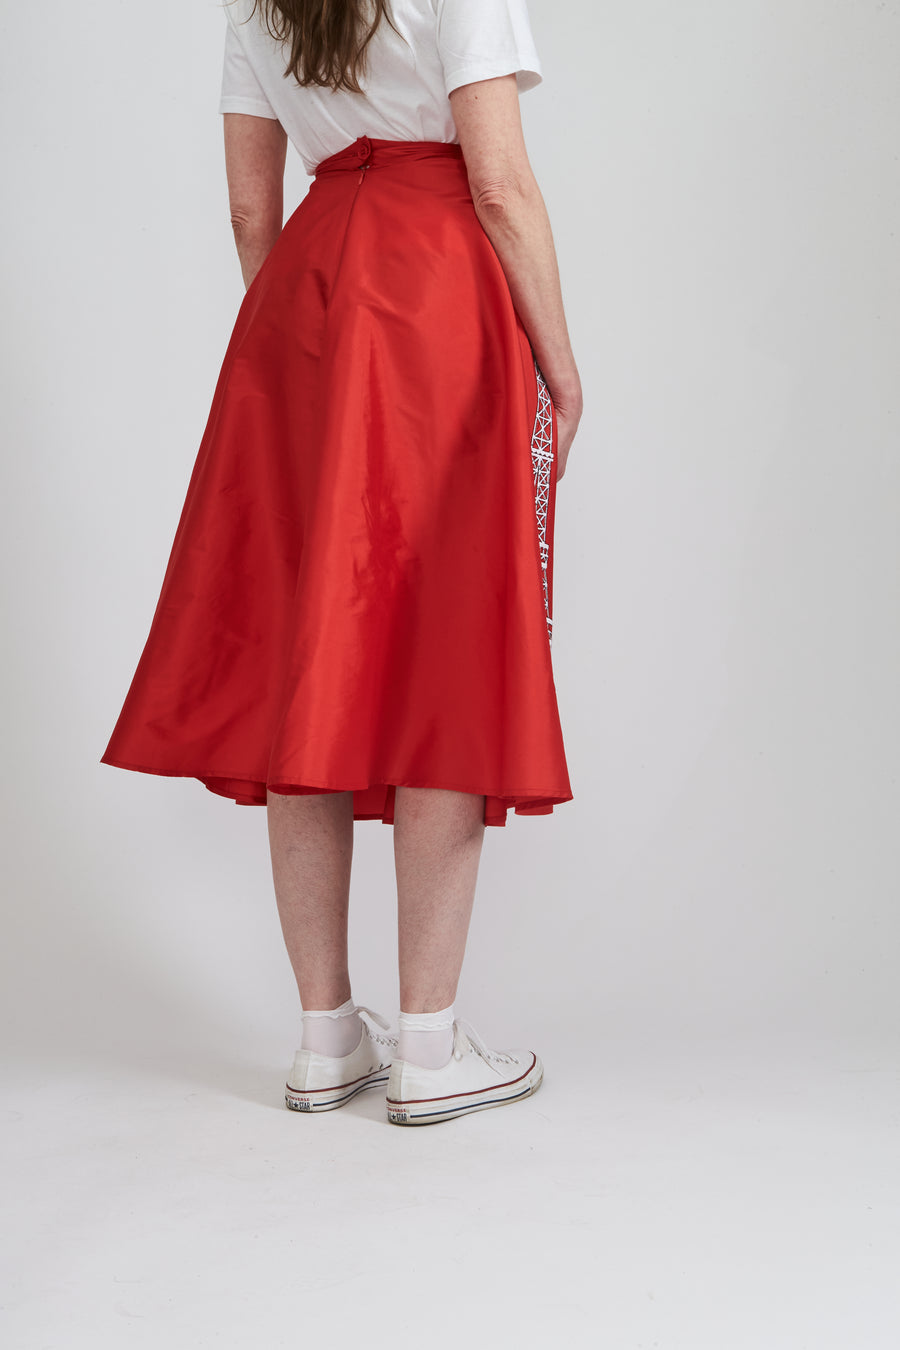 BATSHEVA - Maggie Skirt in Red Taffeta with Eiffel Tower Embroidery